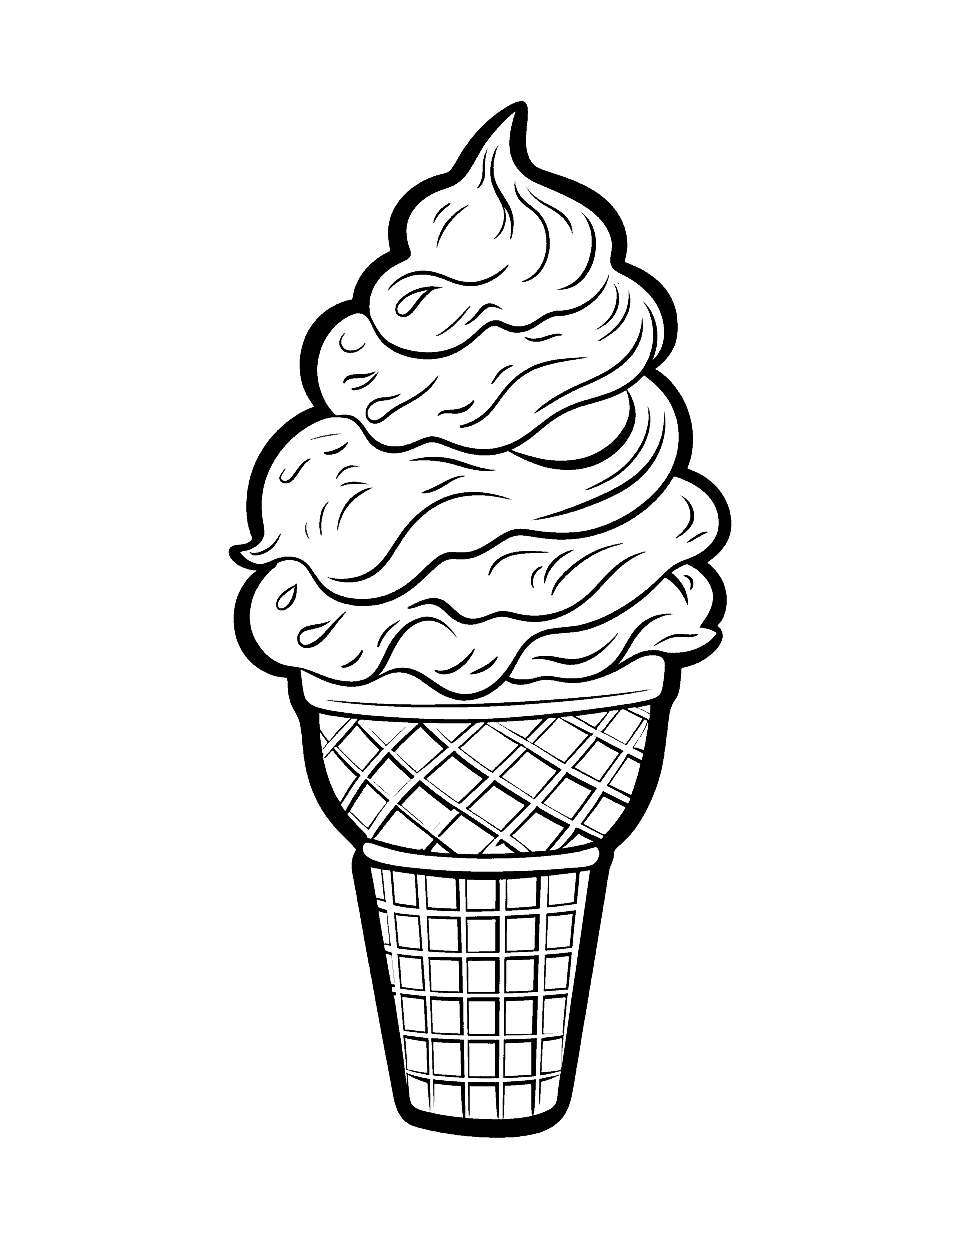 Preschool Ice Cream Fun Coloring Page - Basic shape forming an ice cream, ideal for preschool coloring.